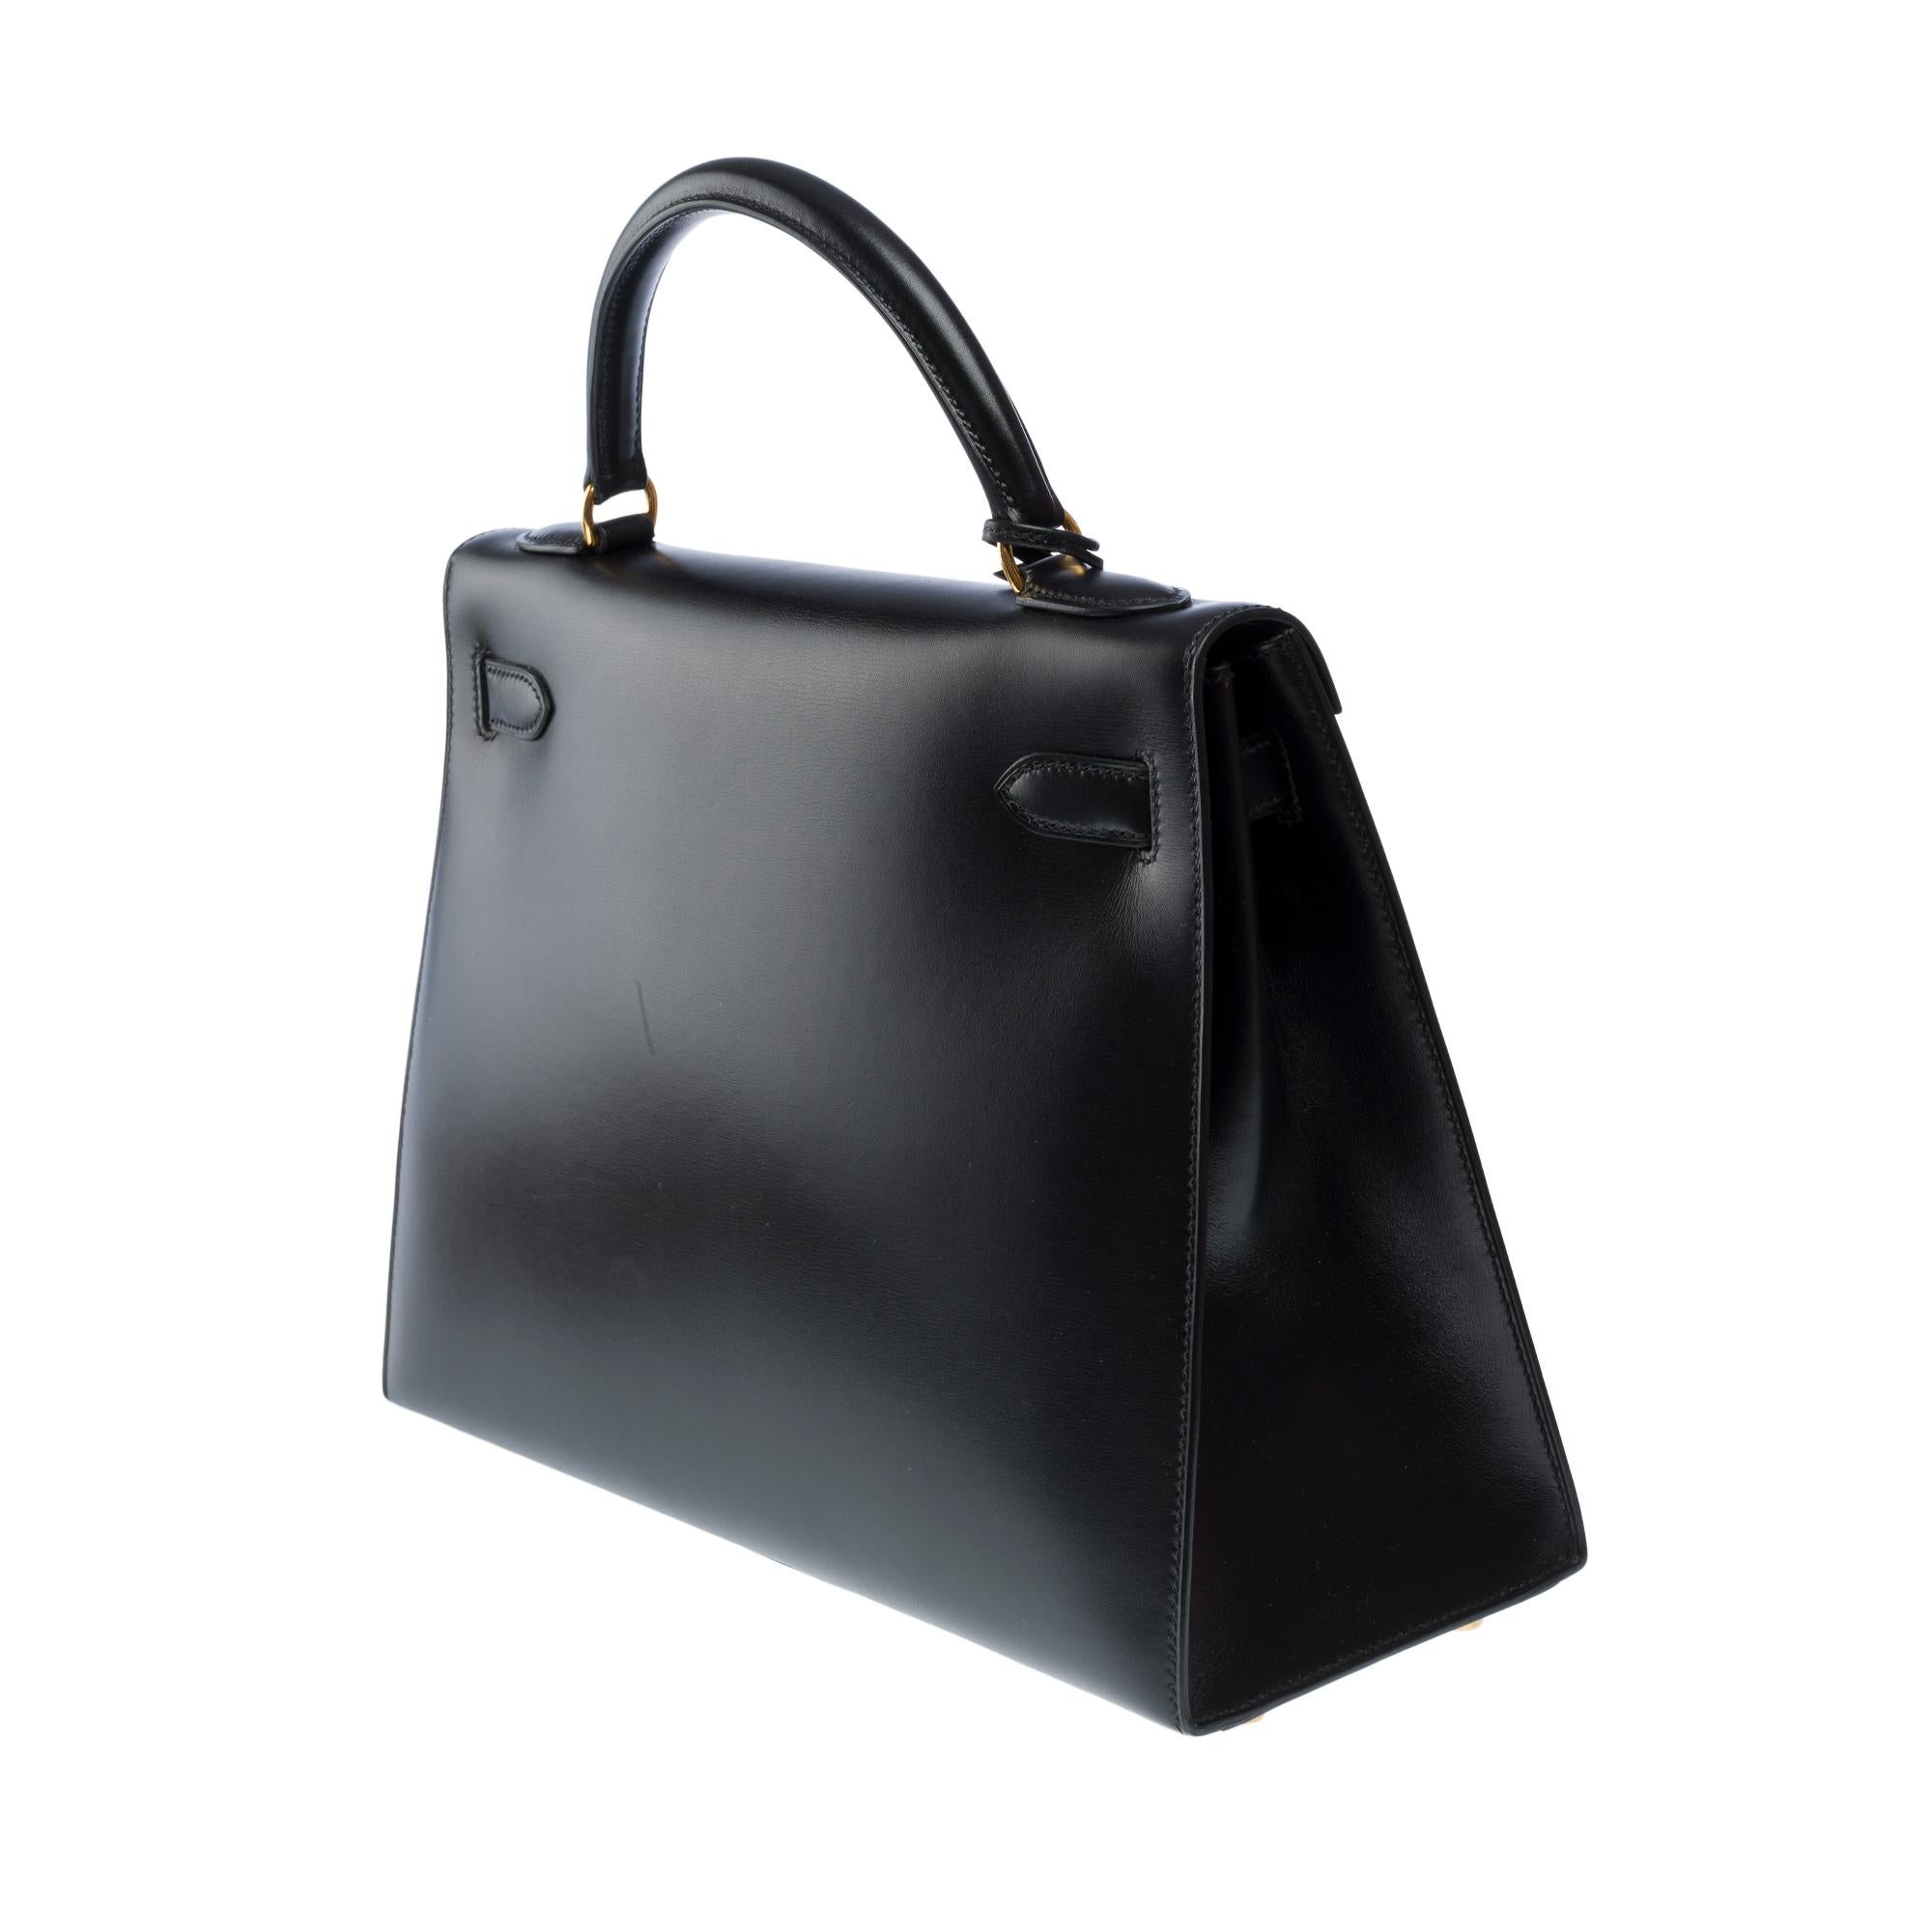 Stunning Hermès Kelly 32 sellier handbag strap in Black Box Calf leather, GHW For Sale 2